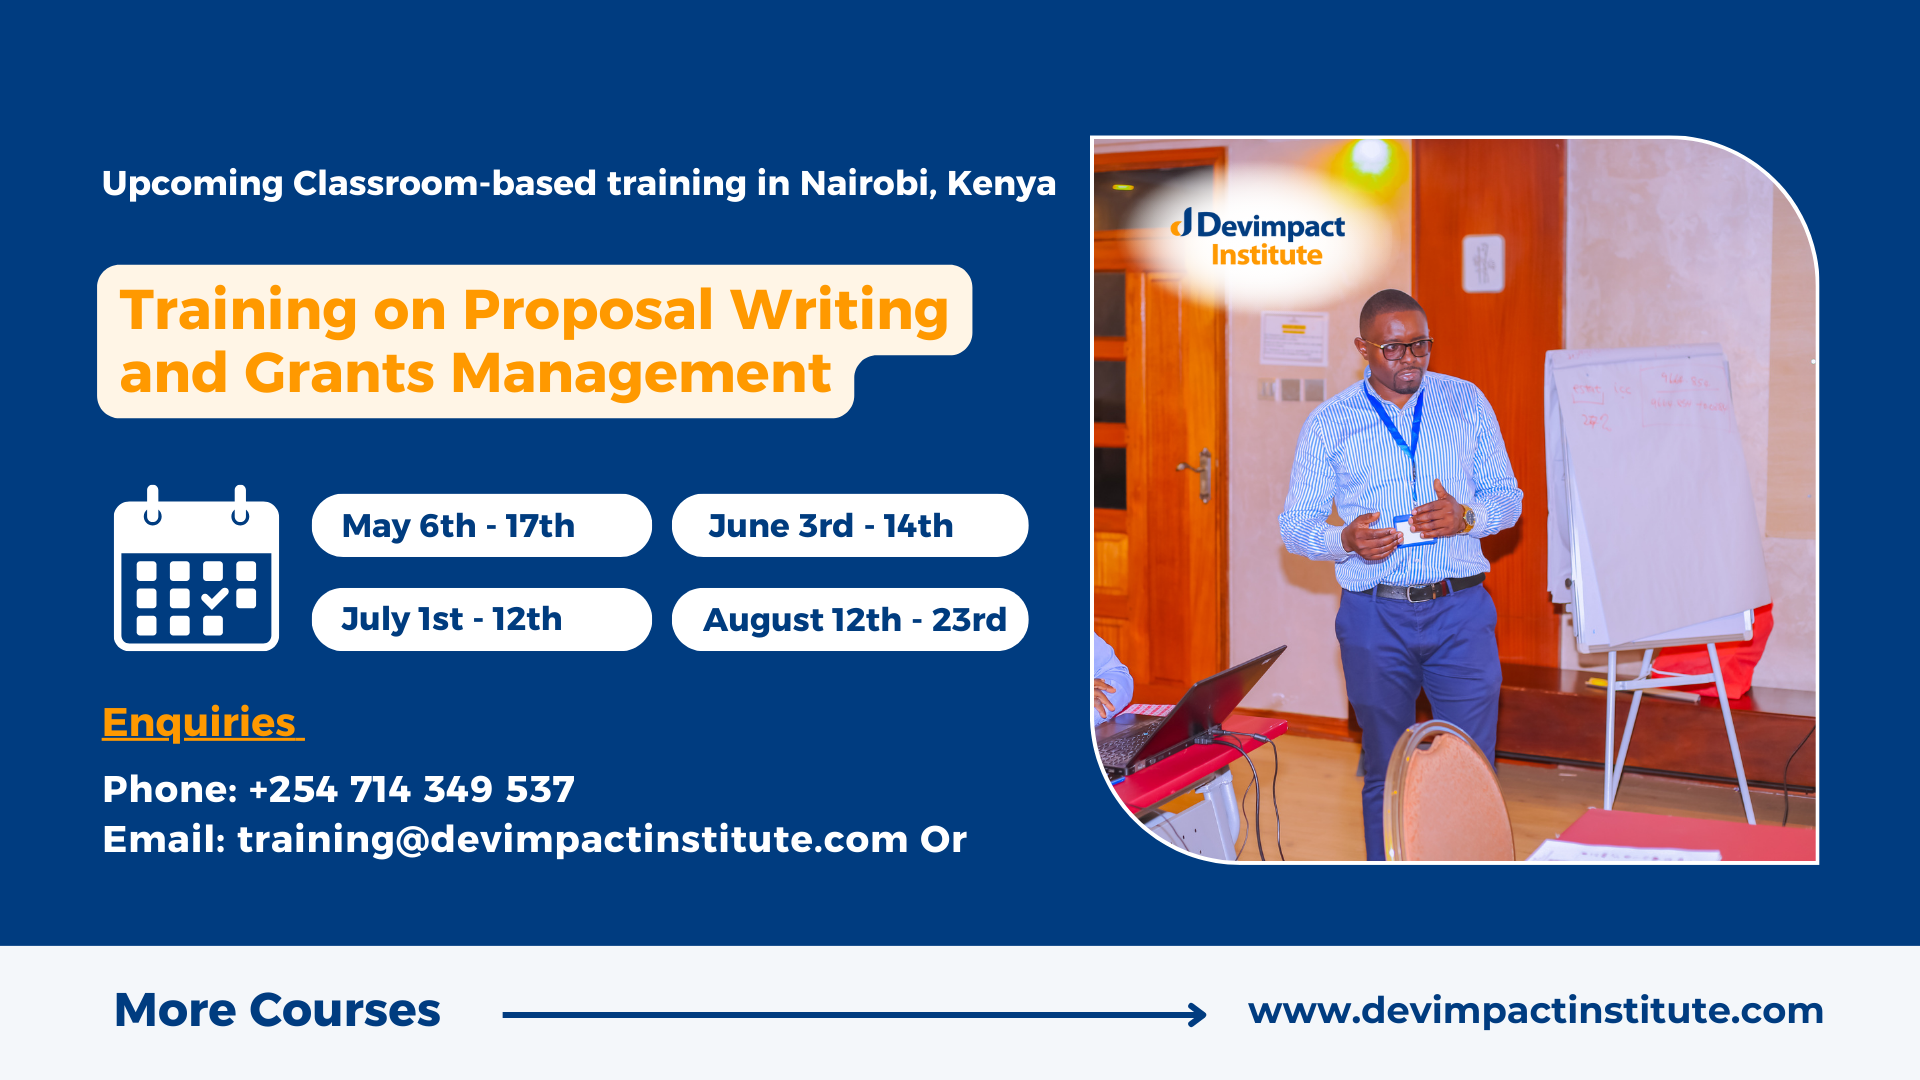 Training on Proposal Writing and Grants Management, Devimpact Institute, Nairobi, Kenya